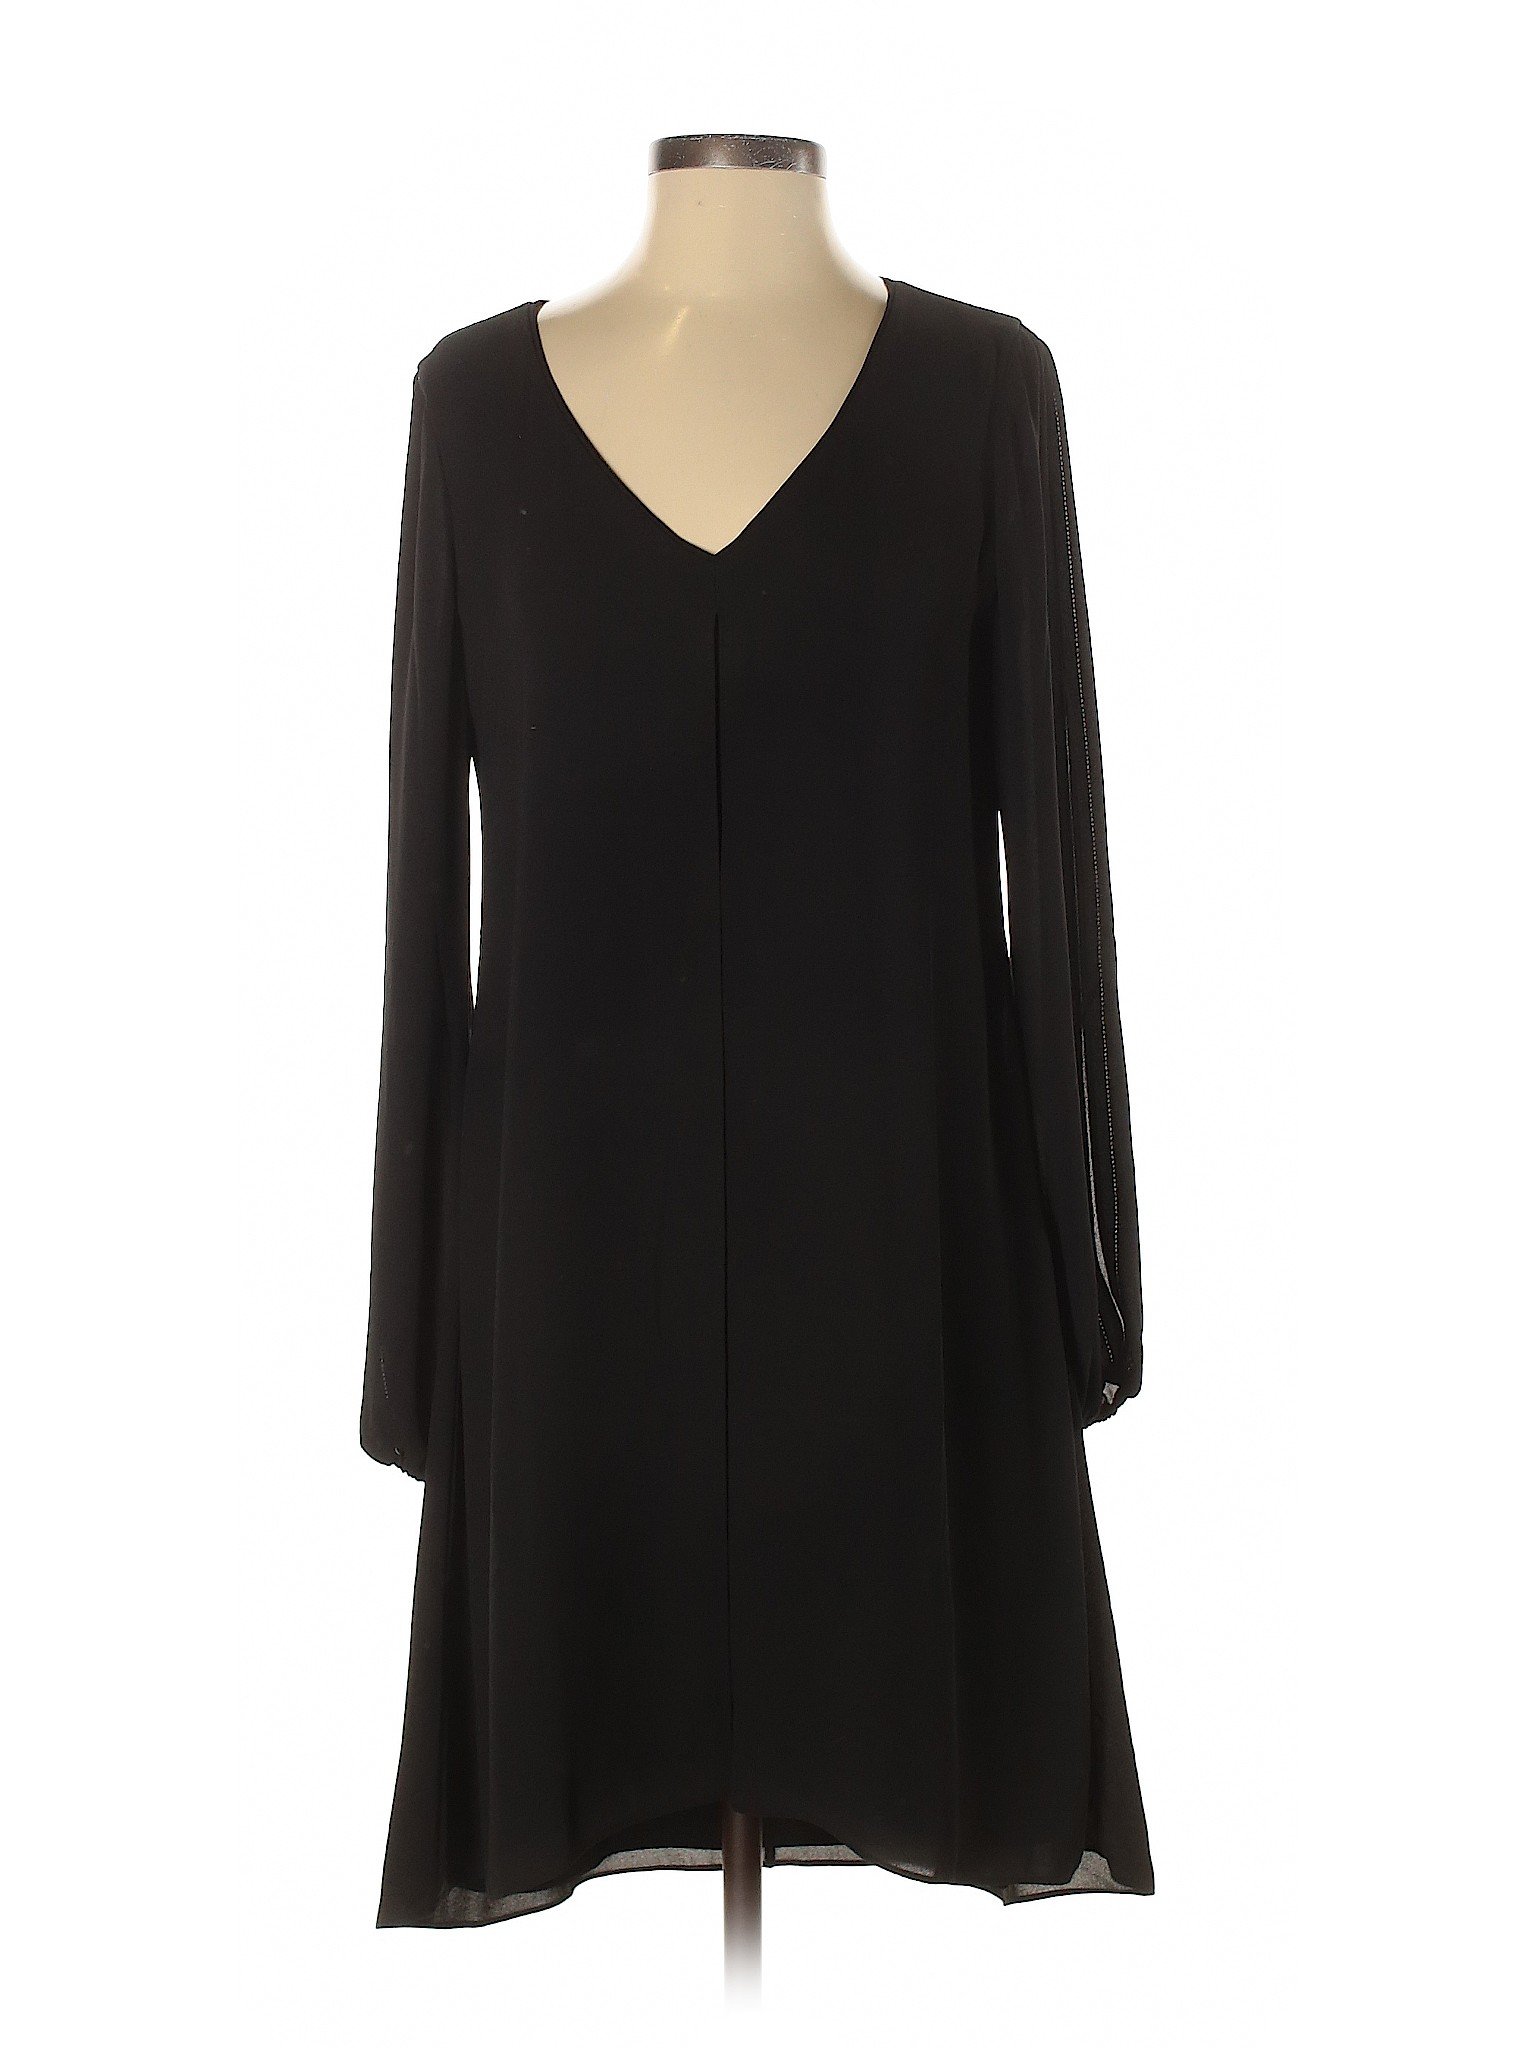 White House Black Market Women Black Casual Dress 2 | eBay